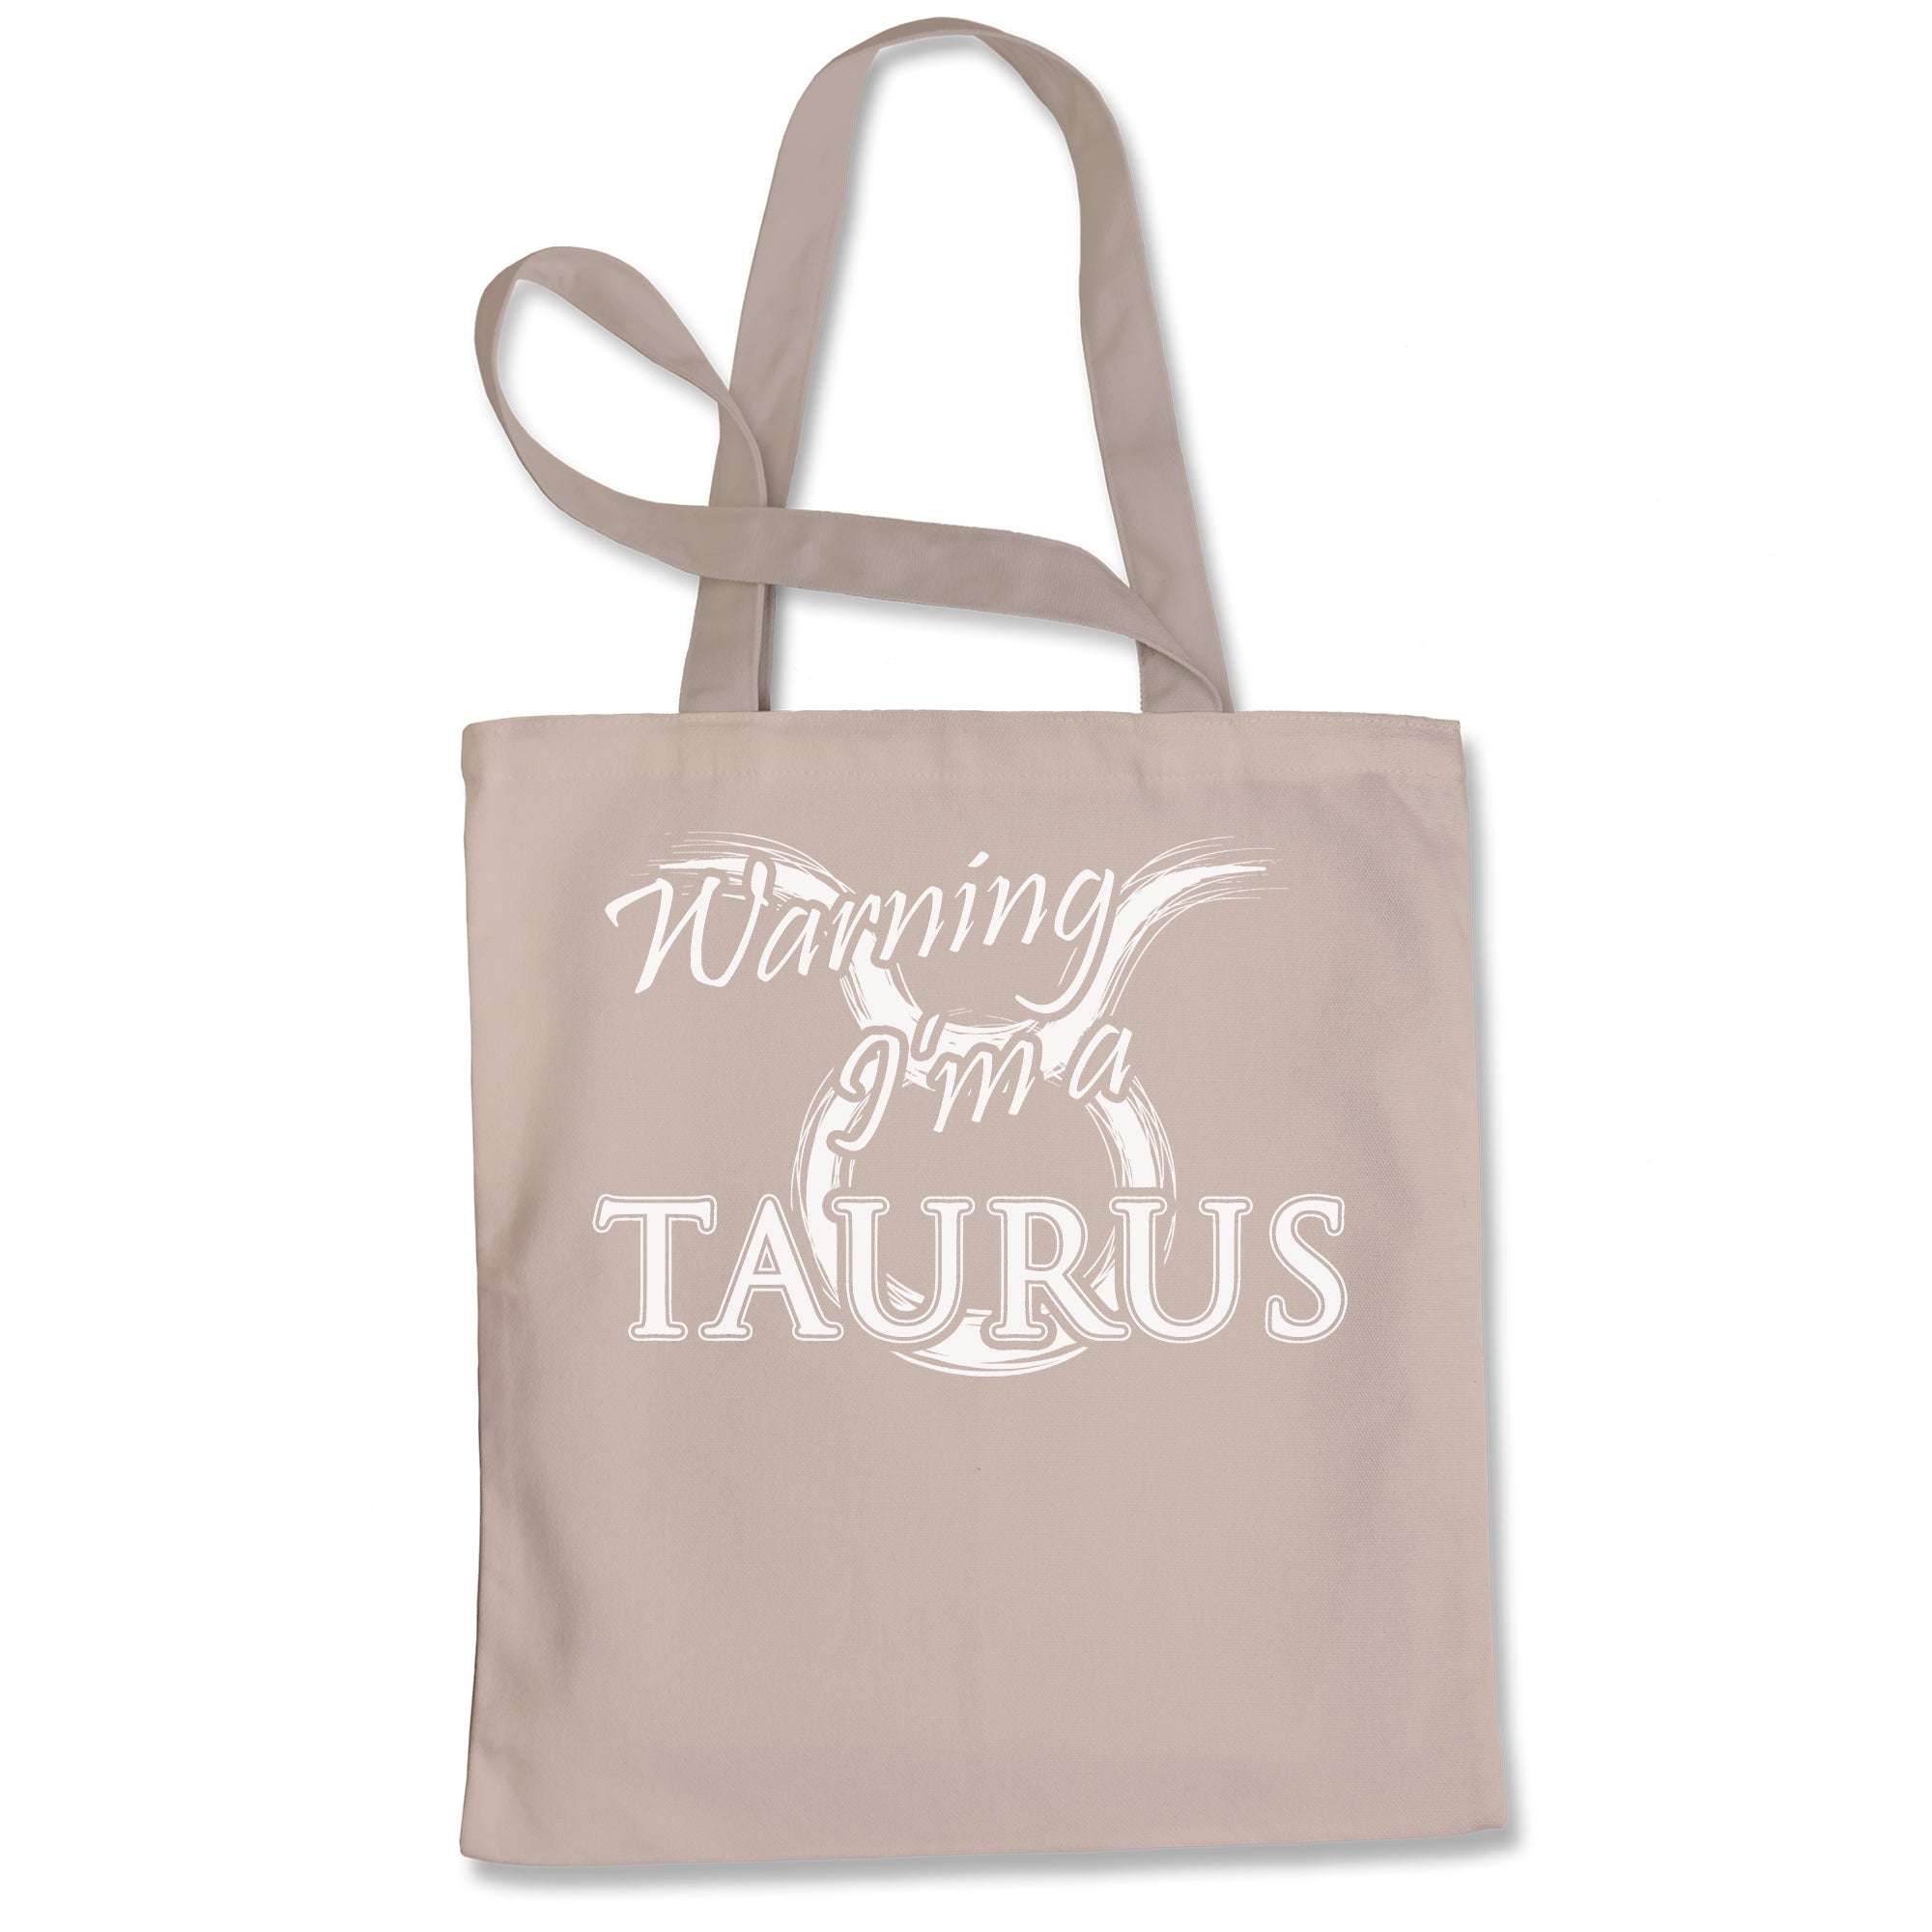 Taurus Pride Astrology Zodiac Sign Tote Bag